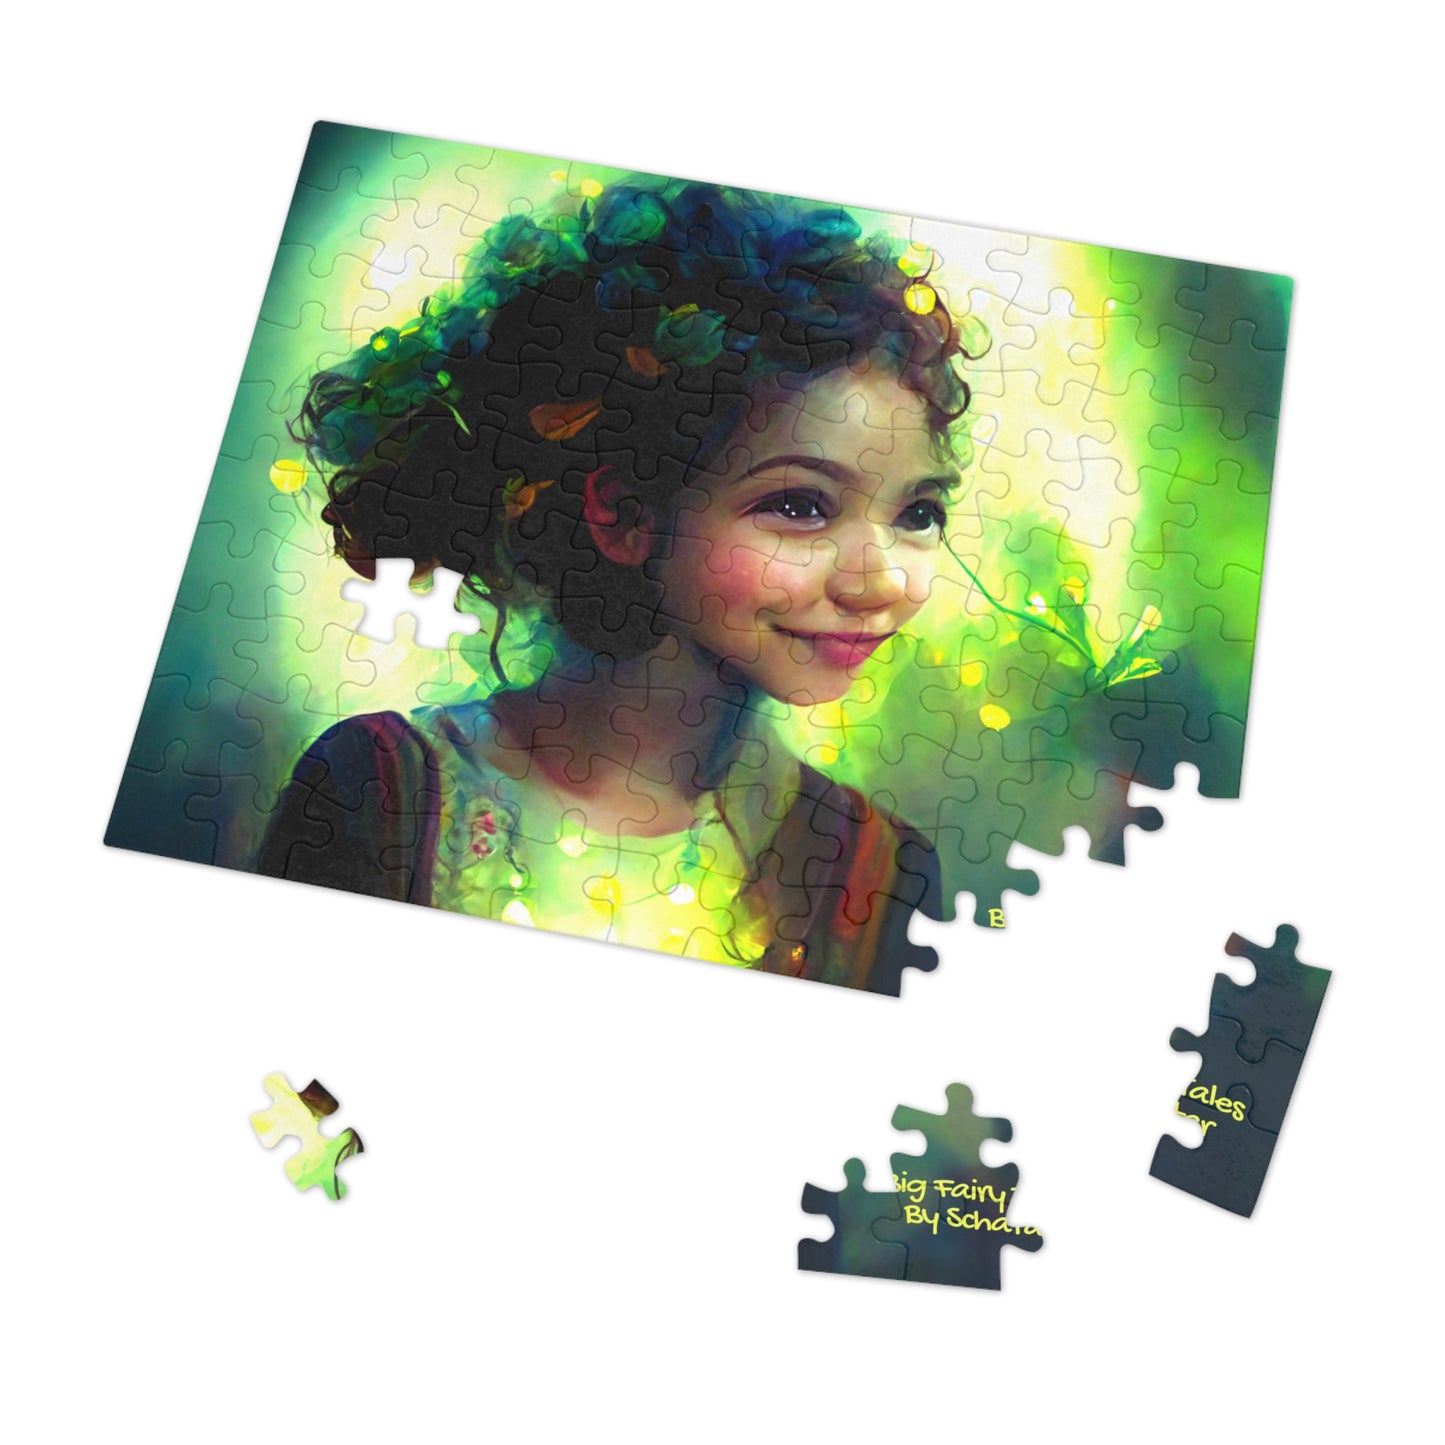 Big Fairy Tales By Schatar - Jackie's Beanstalk Original Jigsaw Puzzle